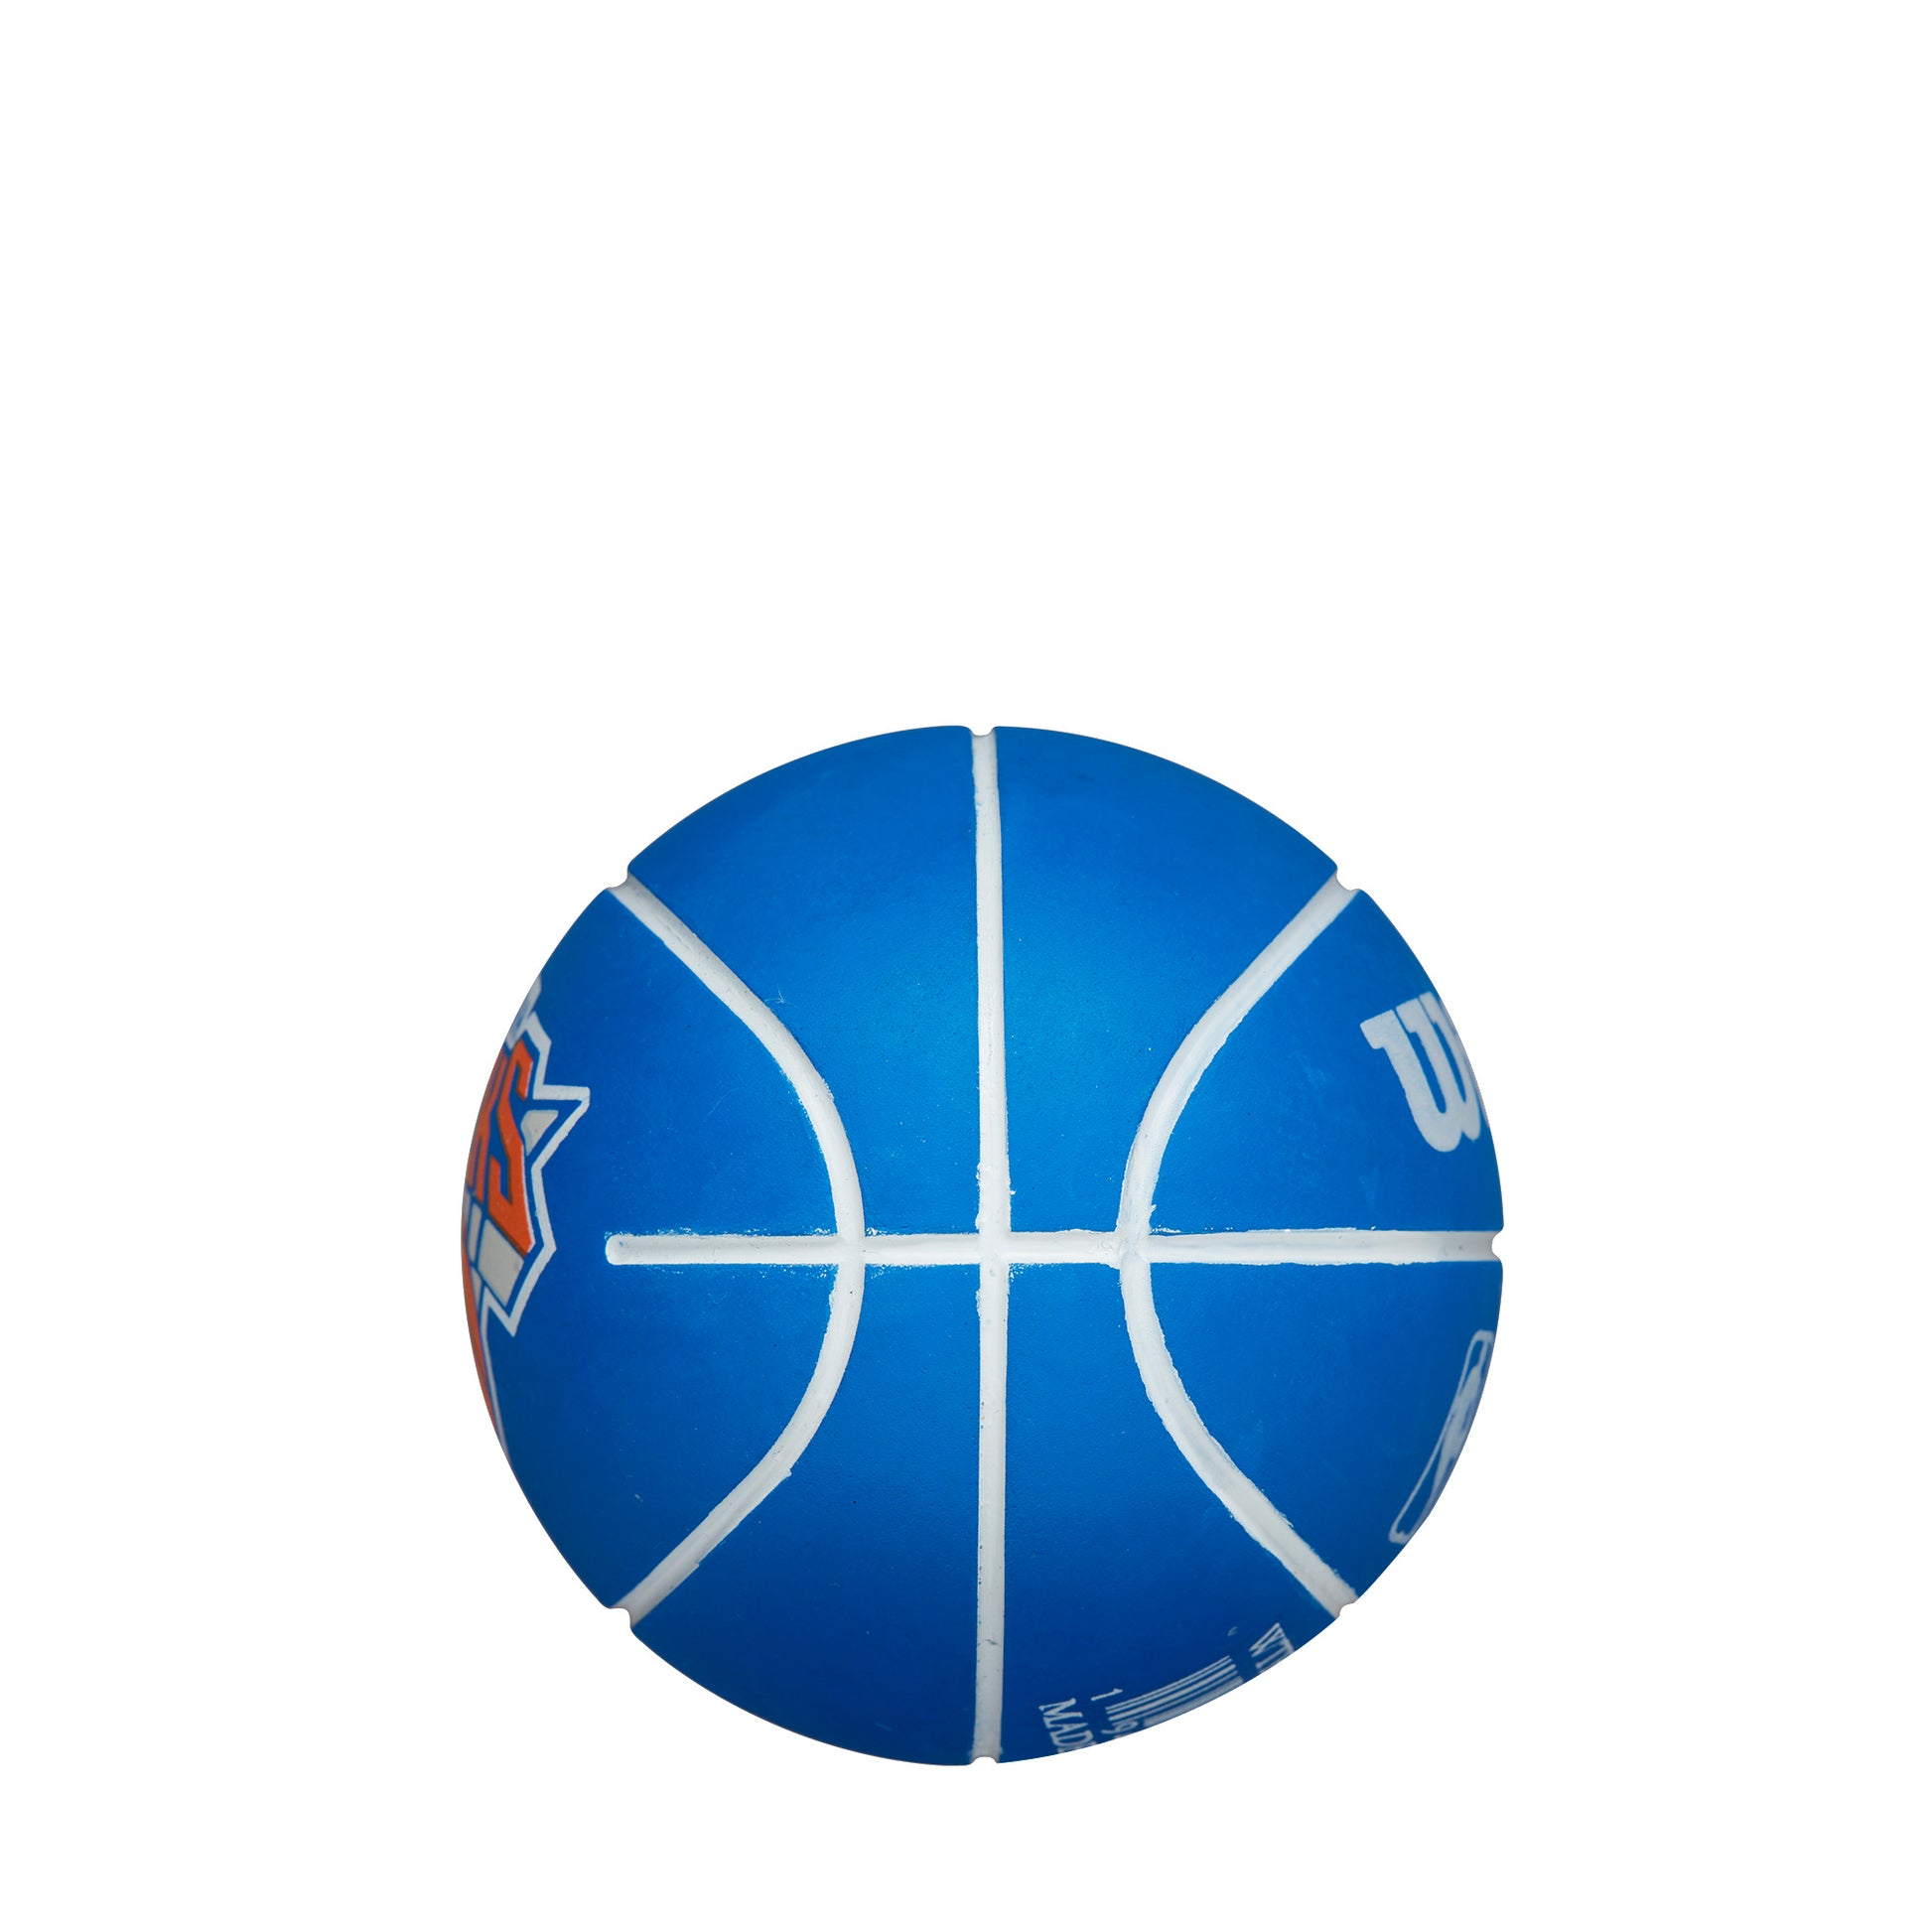 Wilson NBA DRIBBLER BASKETBALL NEW YORK KNICKS Blue WTB1100NY